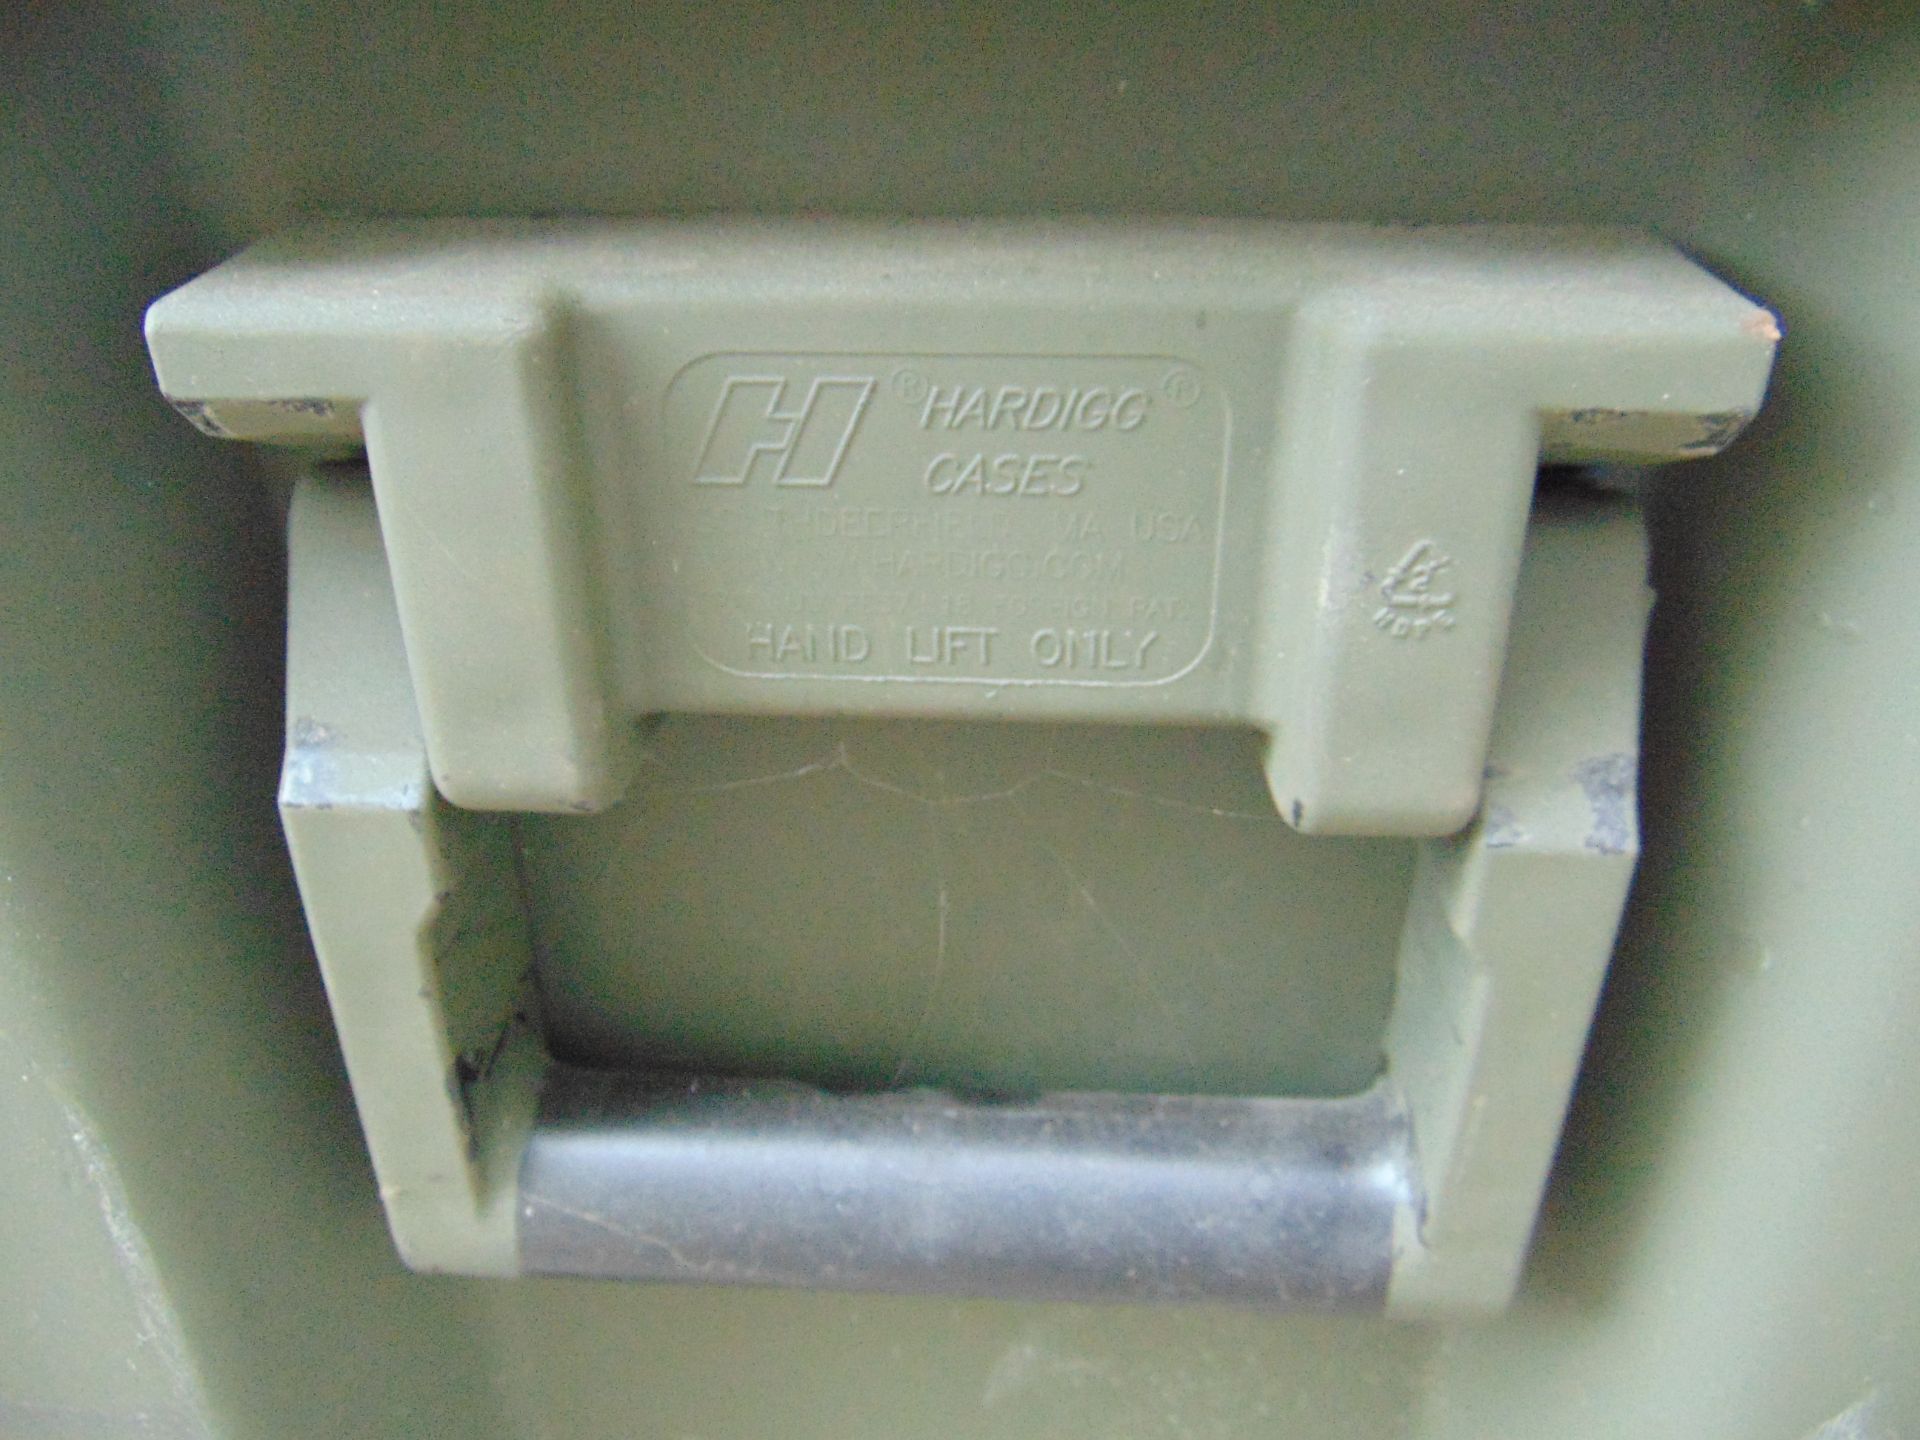 Heavy Duty Peli Hardigg Transit Case 80x60x50cm - Image 4 of 4